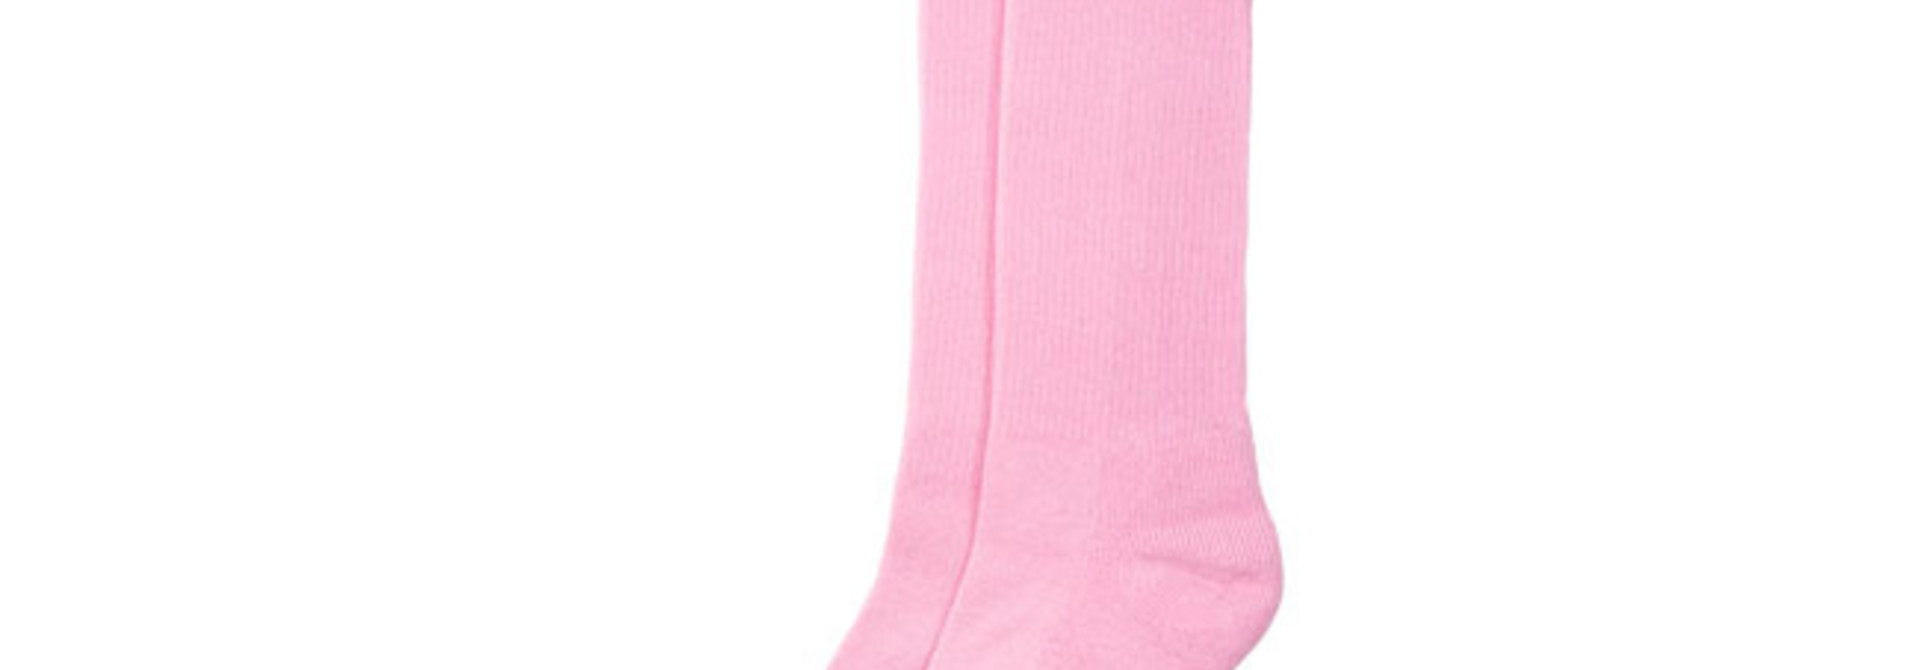 American Socks Bubblegum pink high